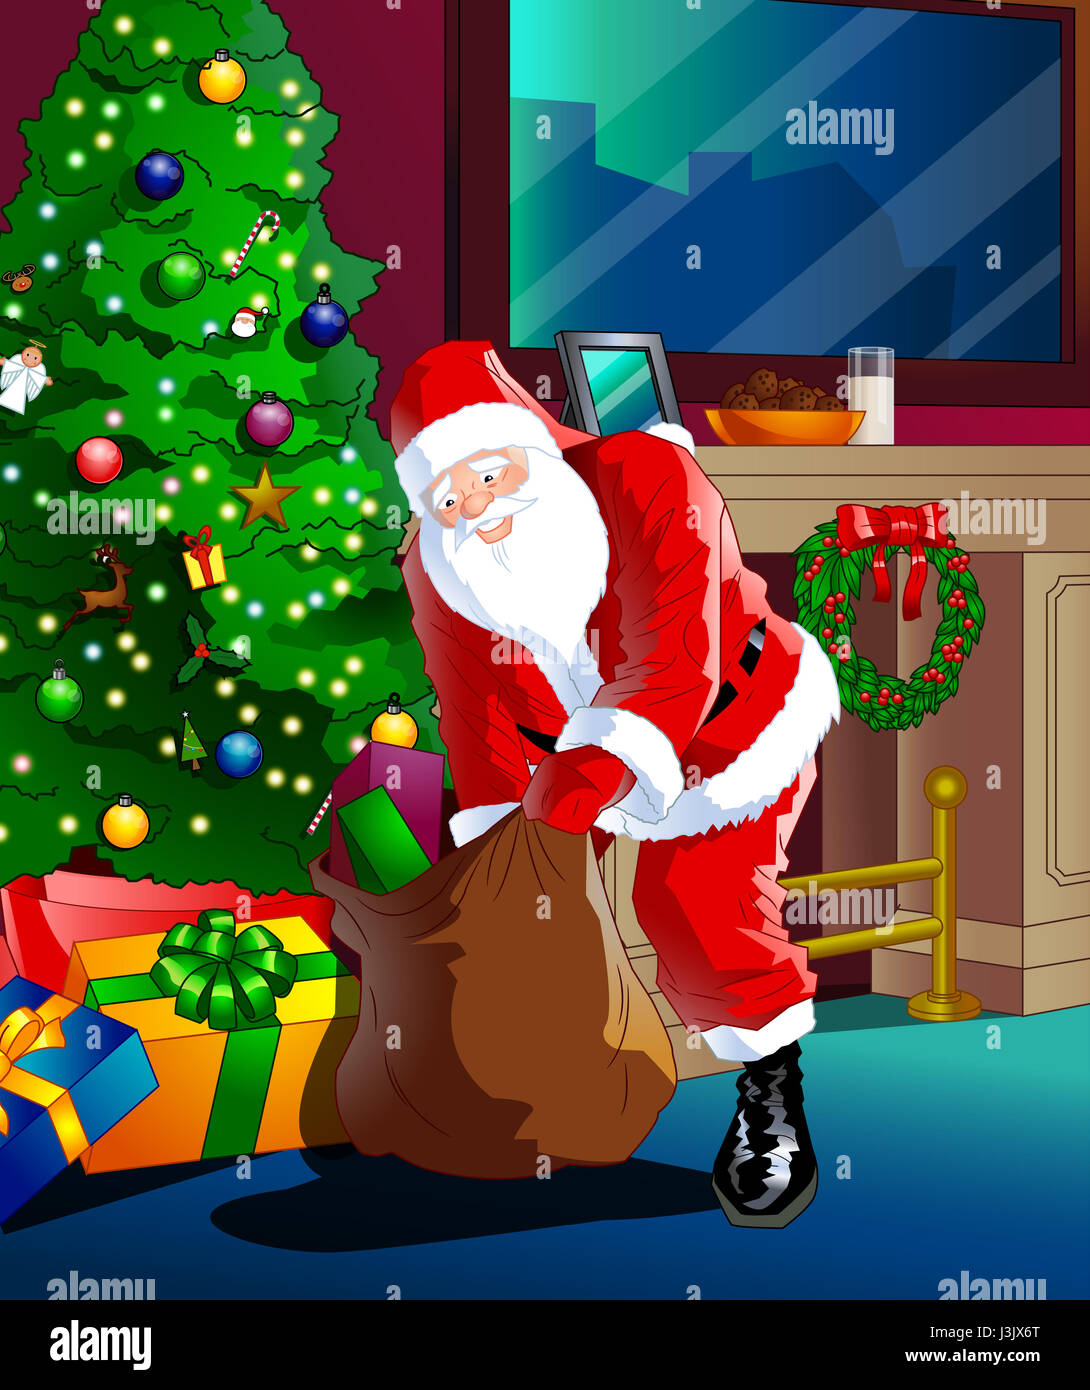 Santa Claus with bag Stock Photo